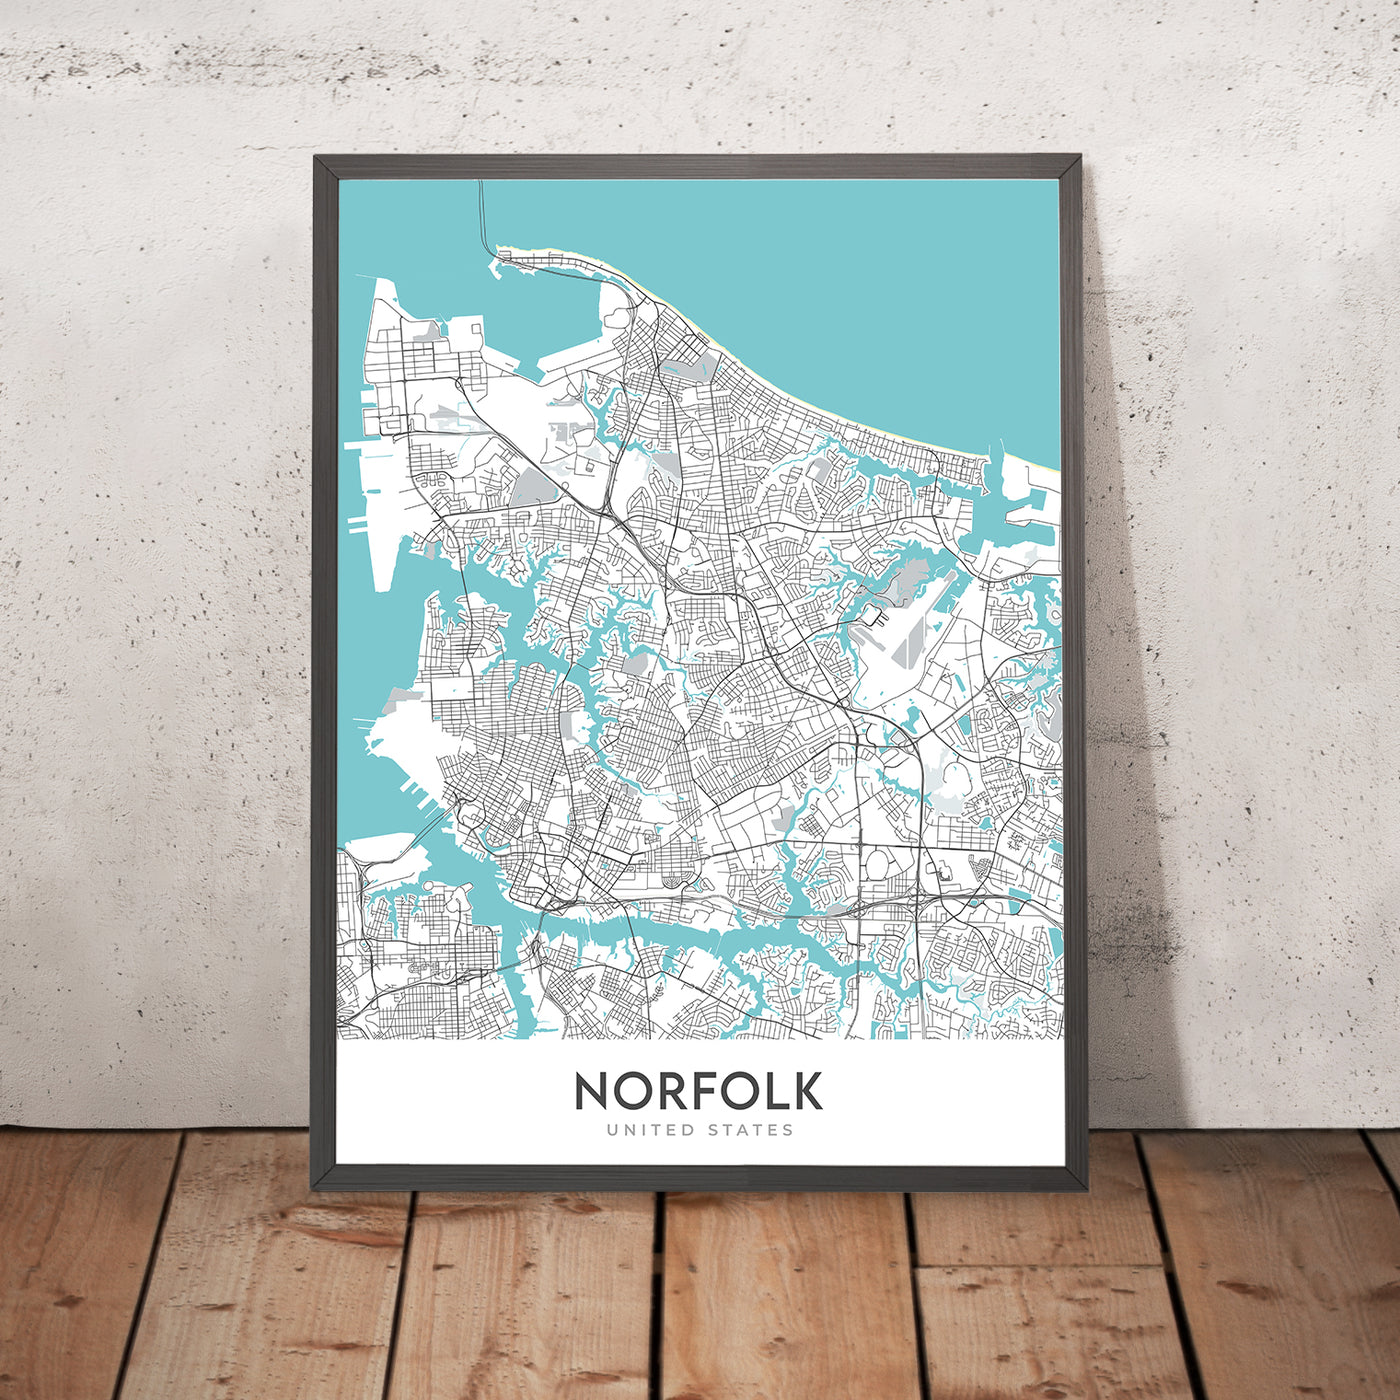 Plan de la ville moderne de Norfolk, Virginie : Gand, Chrysler Museum, Nauticus, Jardin botanique de Norfolk, I-264